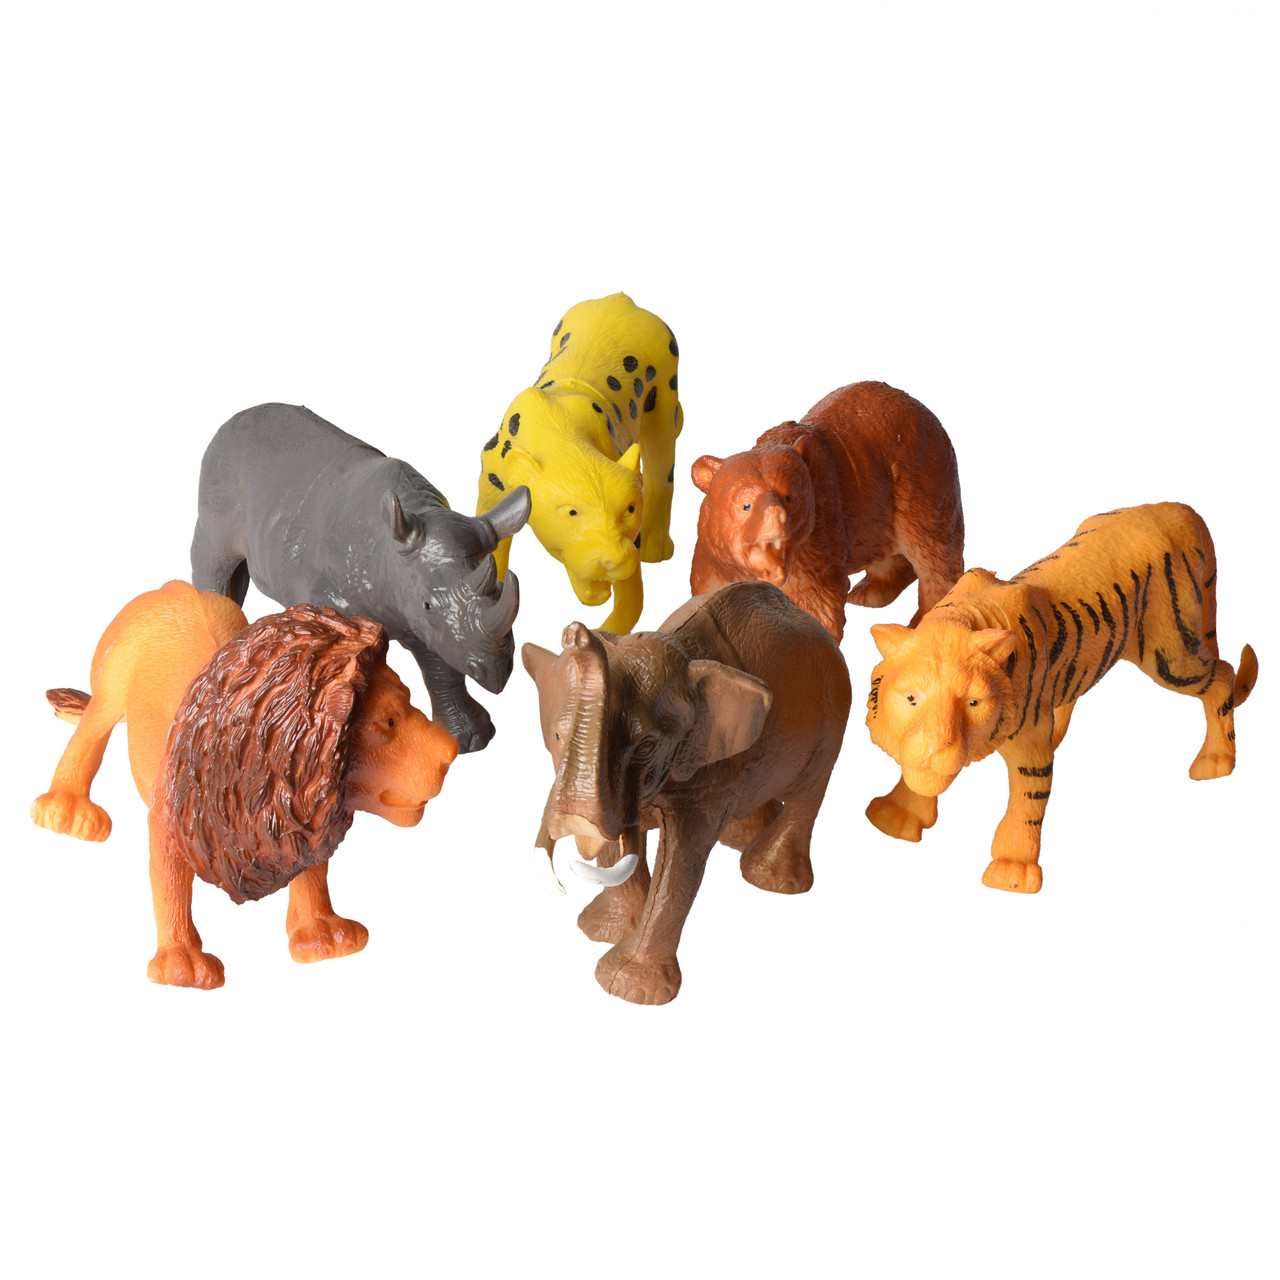 Animal Figures, Jumbo Jungle Animal Toy Set 12 Pieces, Playkidz toys Realistic Wild Vinyl for Kids, Toddler, Child, Plastic Animal Party Learning Forest Farm Animal Toys Playset. - Toys 4 U